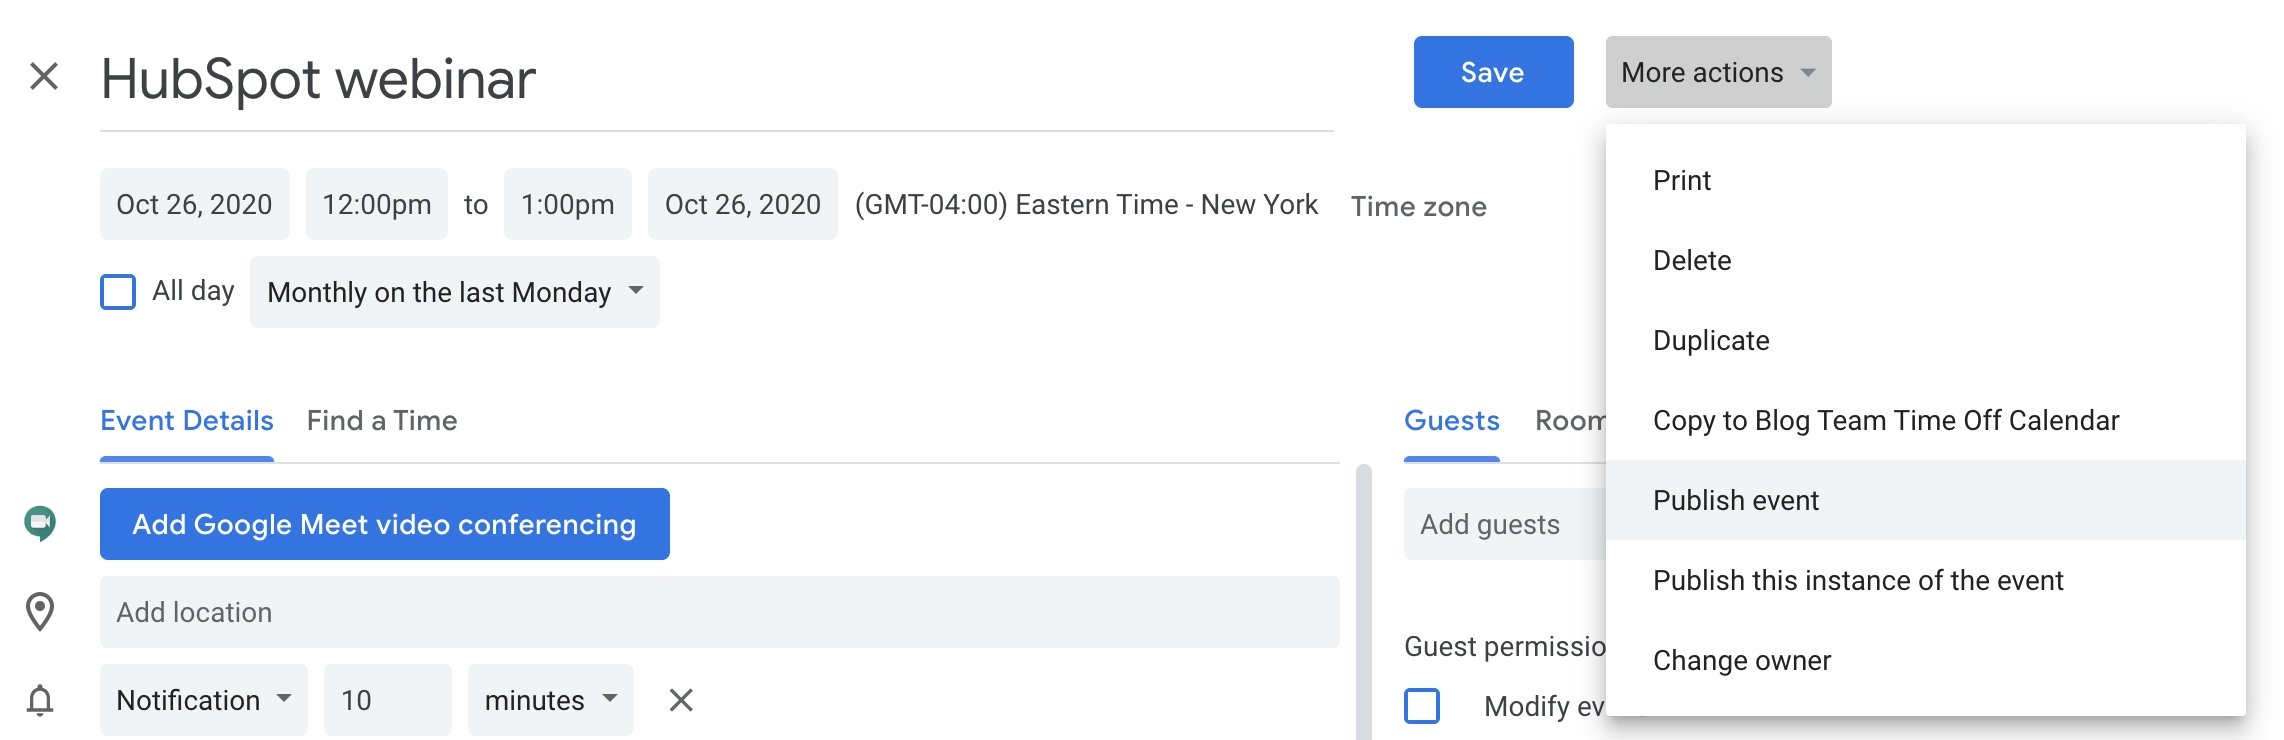 Tips on how to Ship a Calendar Invite with Google Calendar Apple